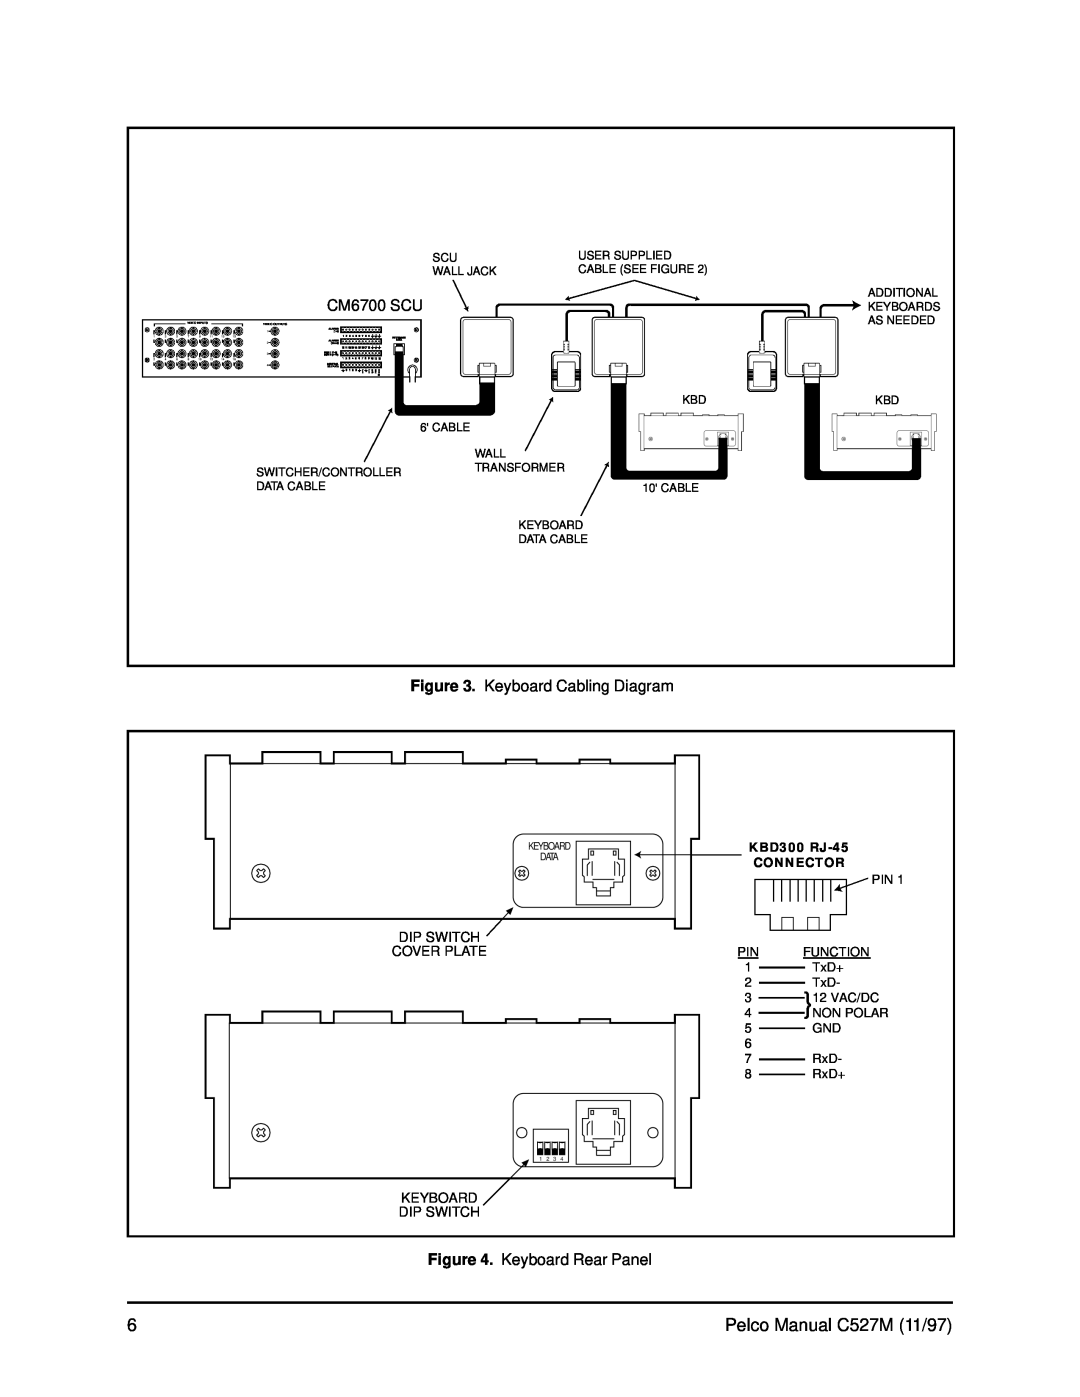 Pelco Kbd300 Keyboard Cabling Diagram, Keyboard Rear Panel, Pelco Manual C527M 11/97, CM6700 SCU, KBD300 RJ-45, Connector 